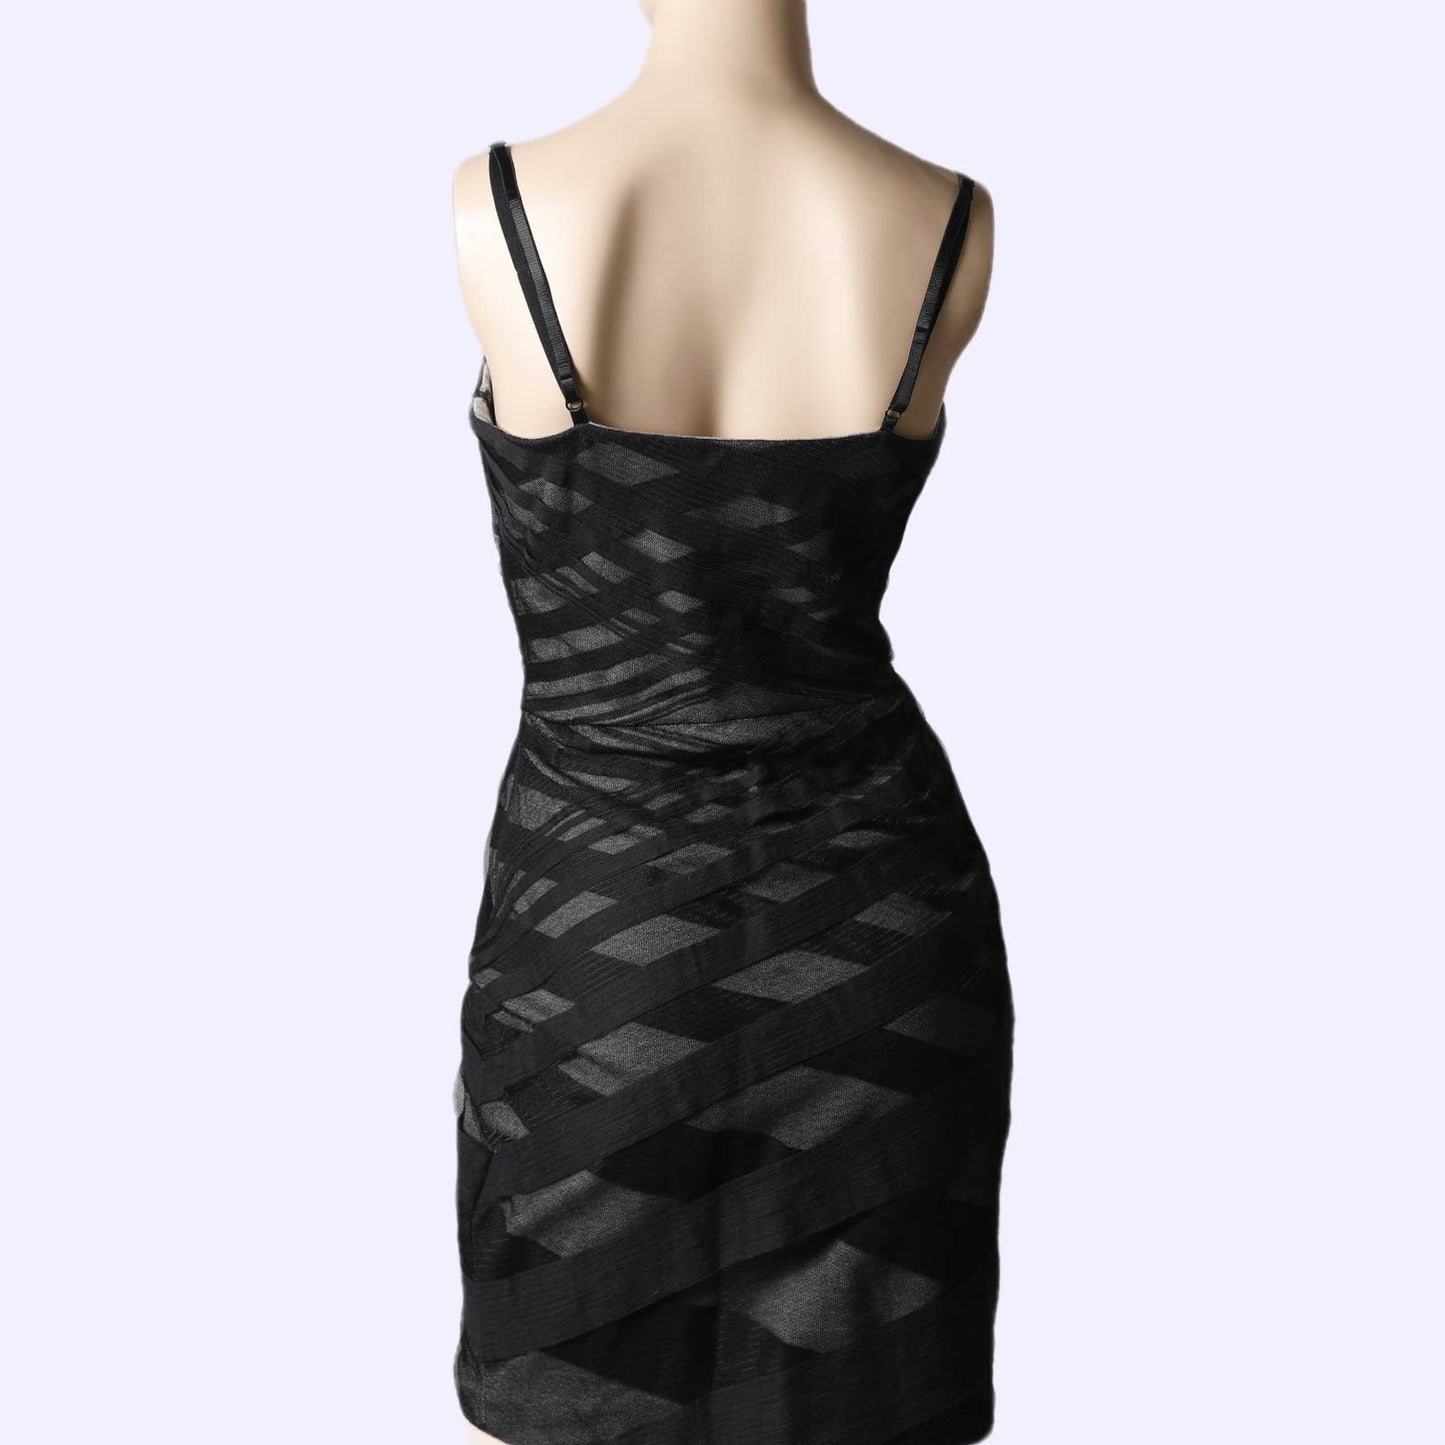 ROBERT RODRIGUEZ Geometric Patterned Sleeveless Mini Dress